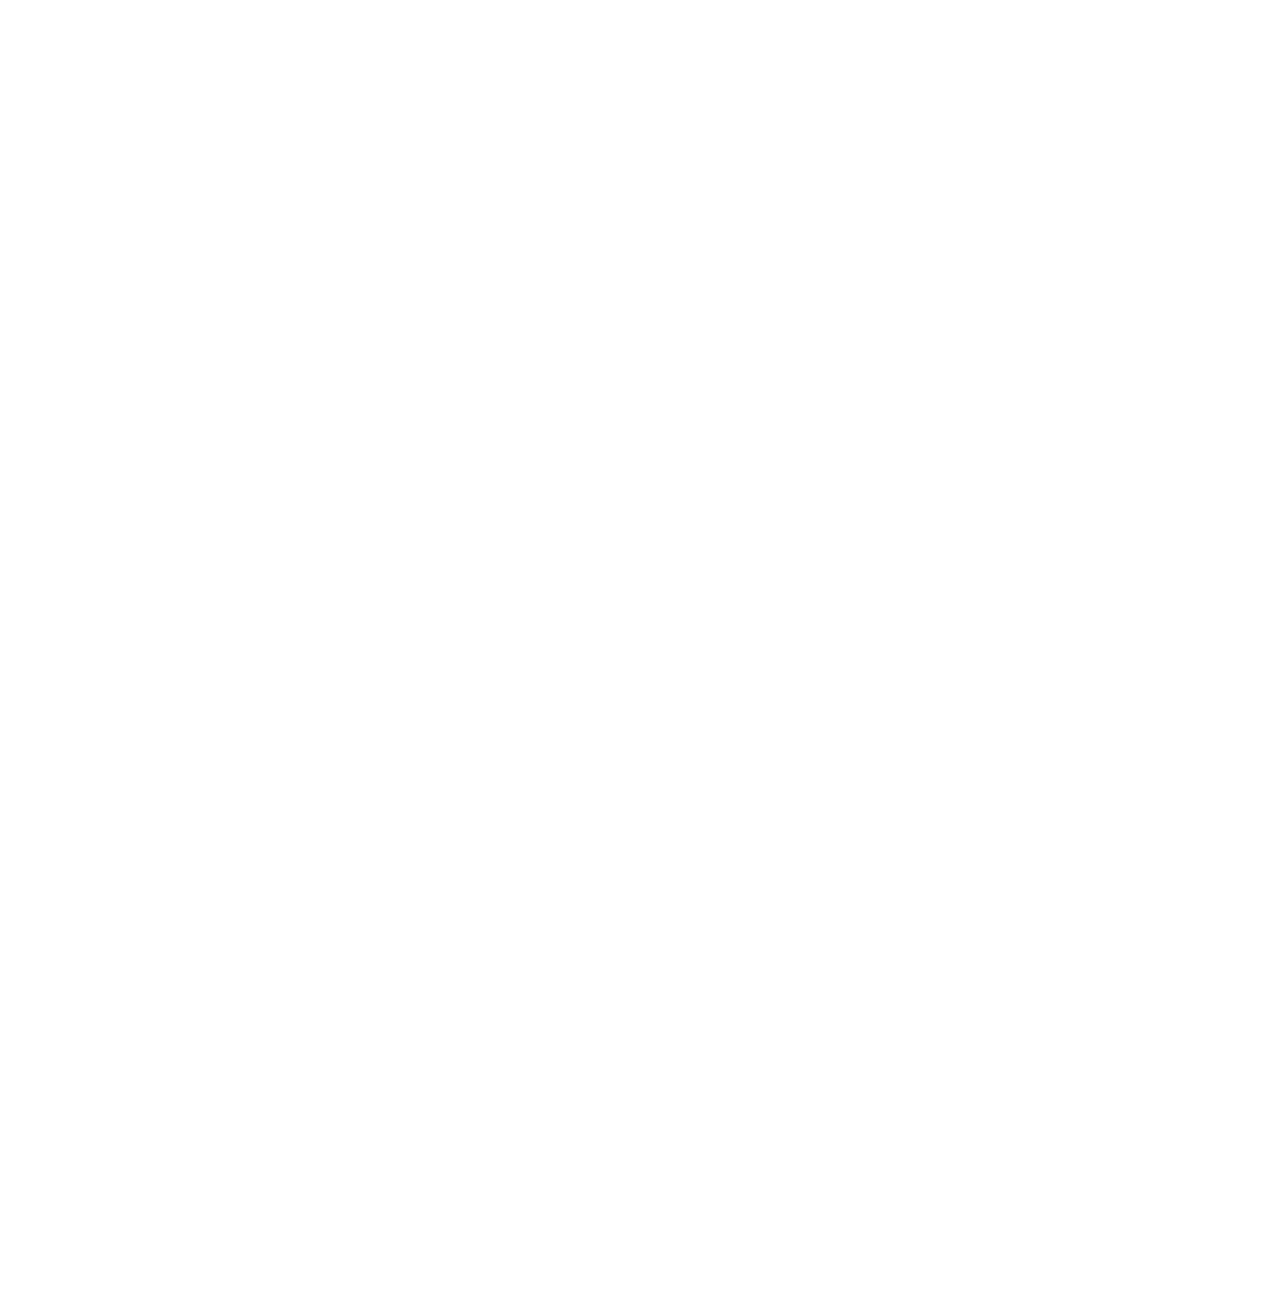 Logotipo de Anana Socks